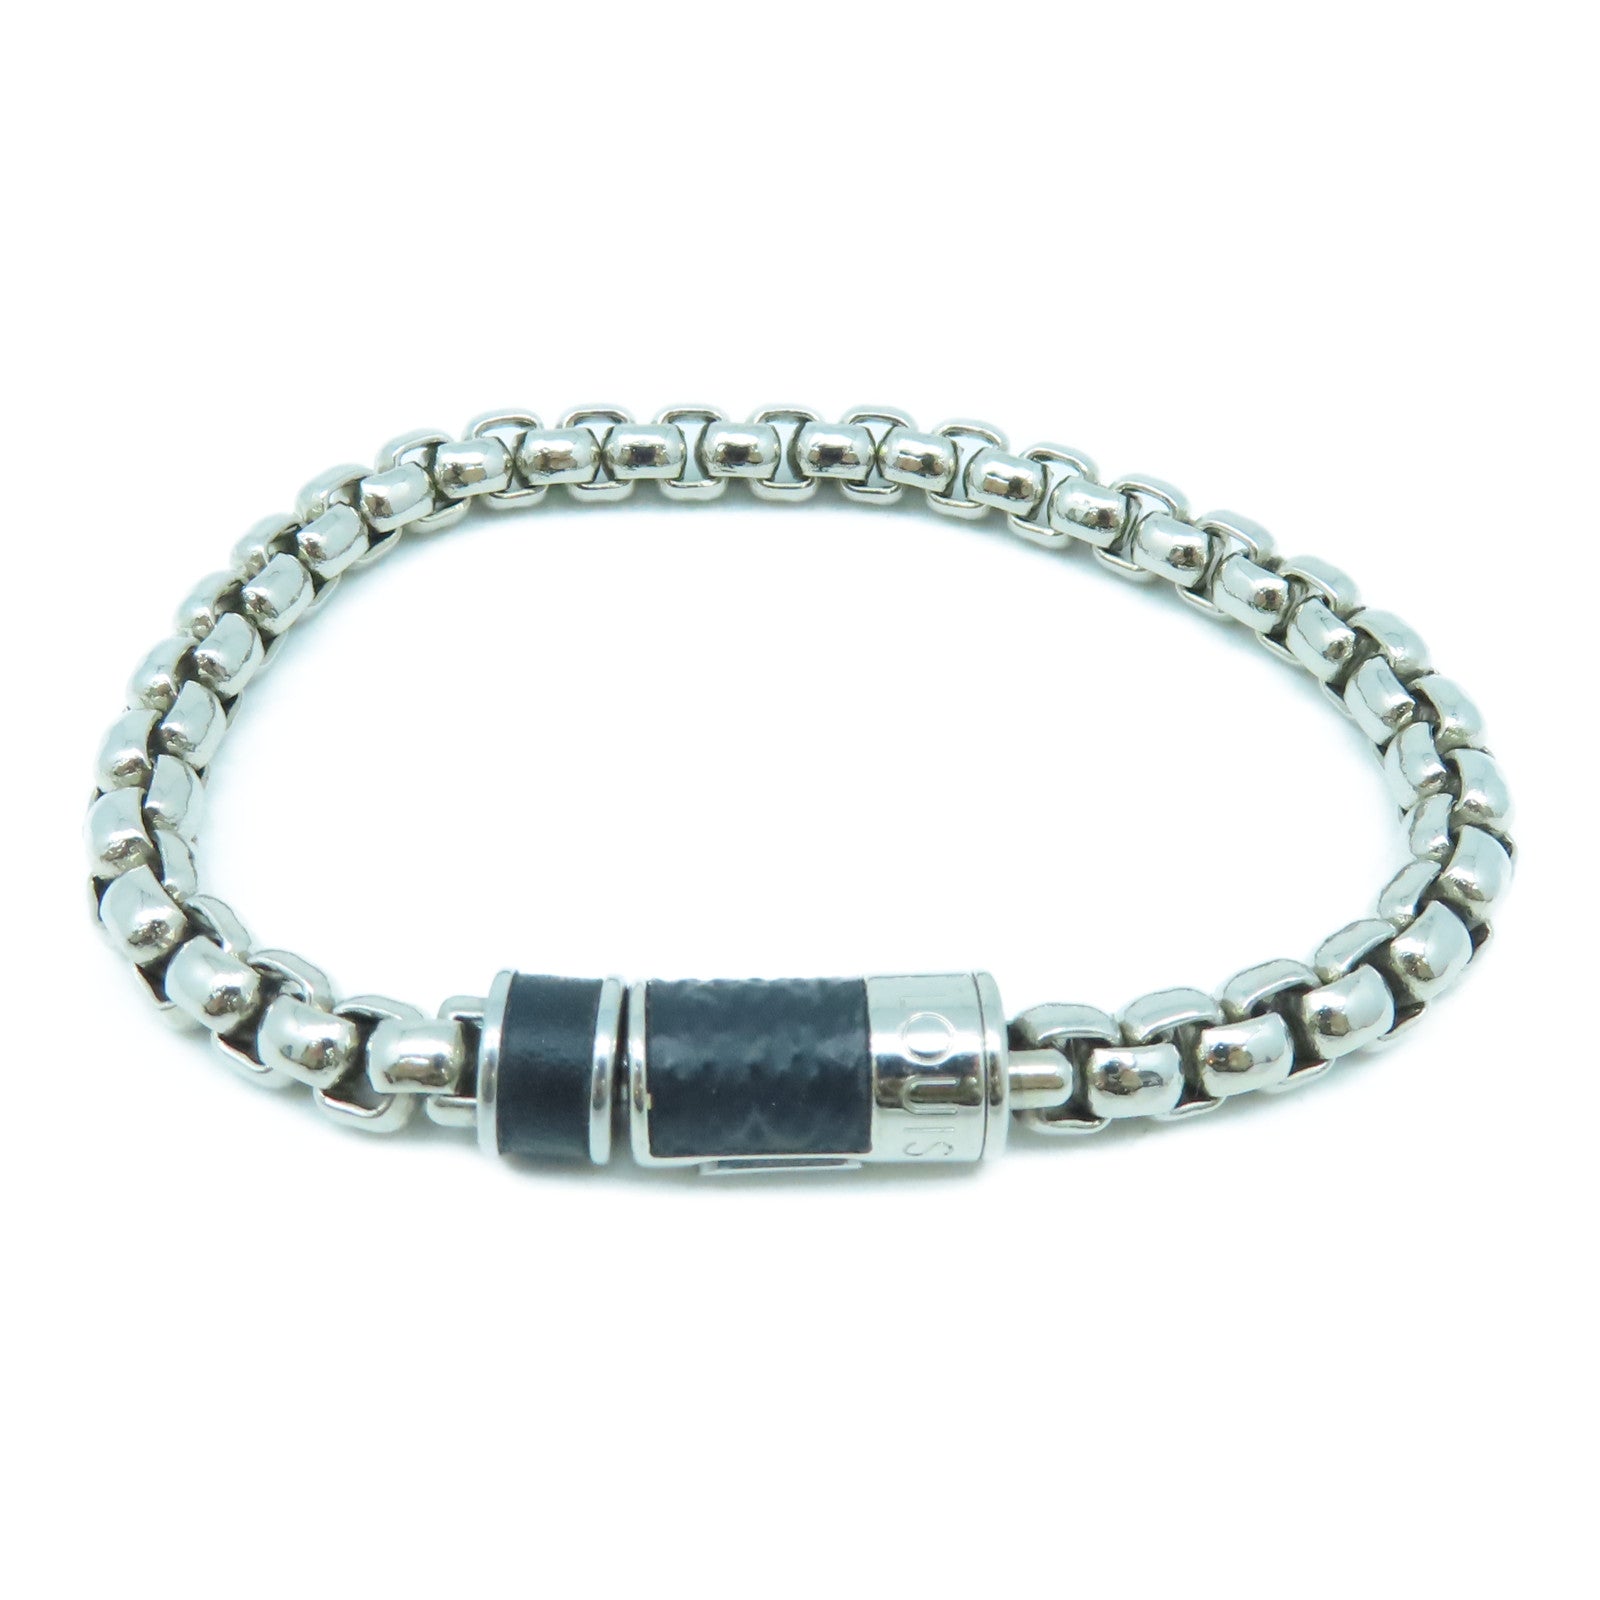 Louis Vuitton MONOGRAM Monogram chain bracelet (M62592)